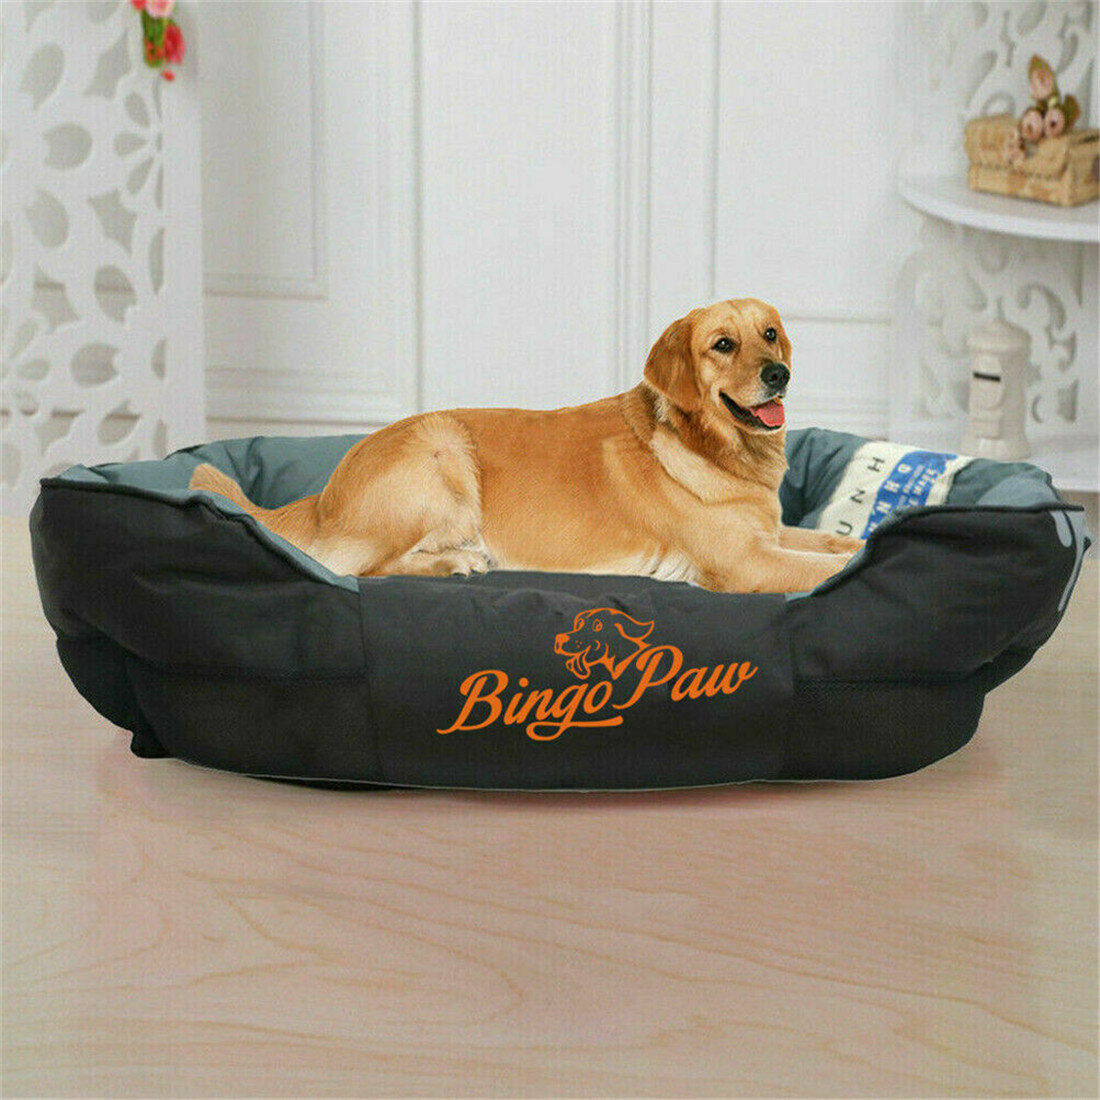 Orthopedic Pet Bed, Waterproof Dog Bed